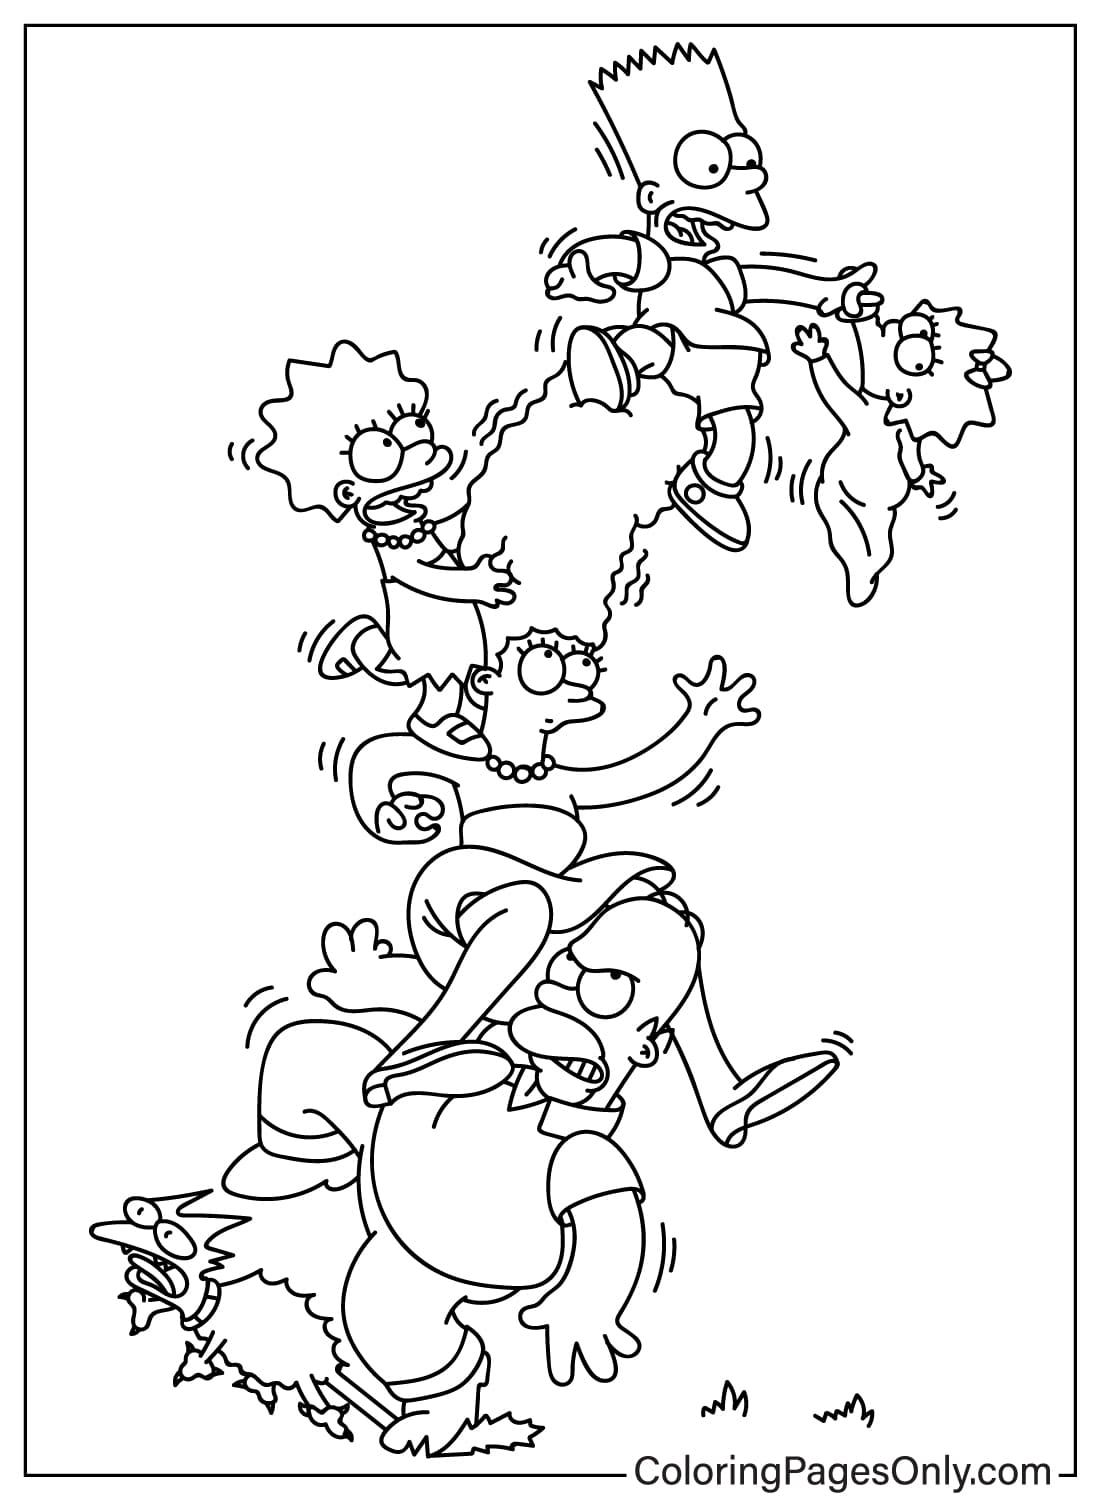 Página para colorir dos Simpsons grátis dos Simpsons